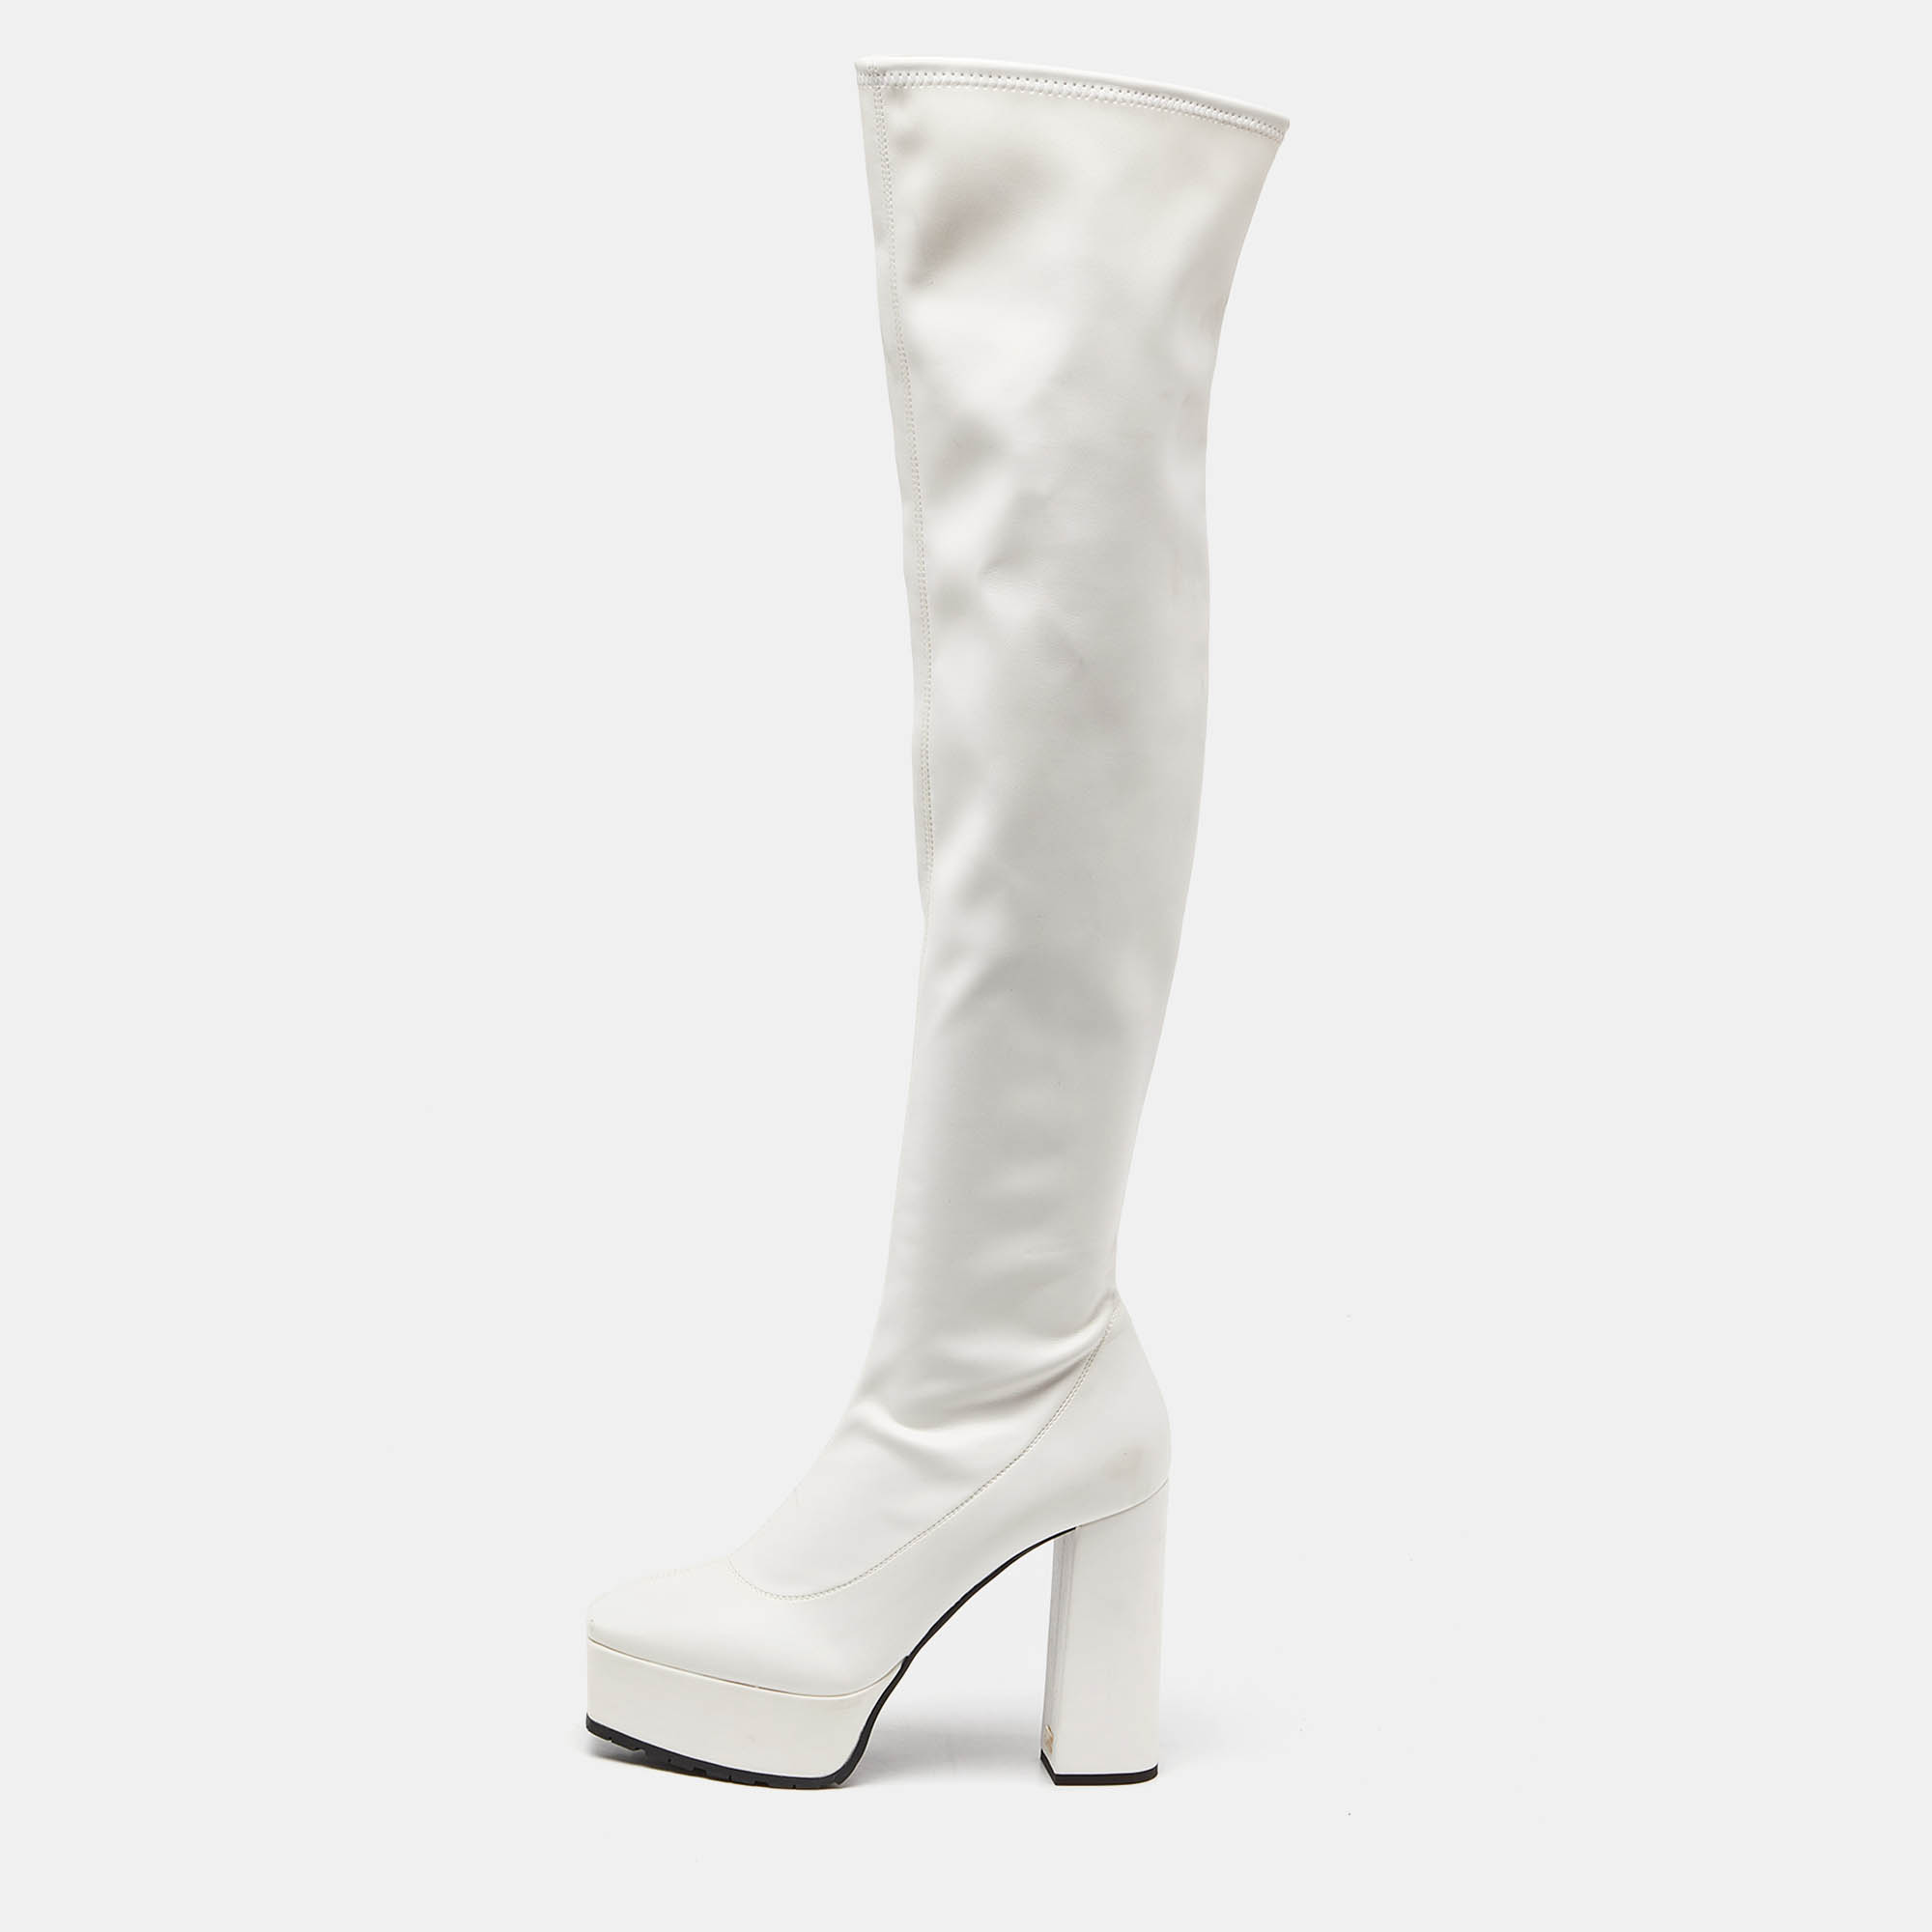 Giuseppe zanotti white leather morgana over the knee length platform boots size 39.5